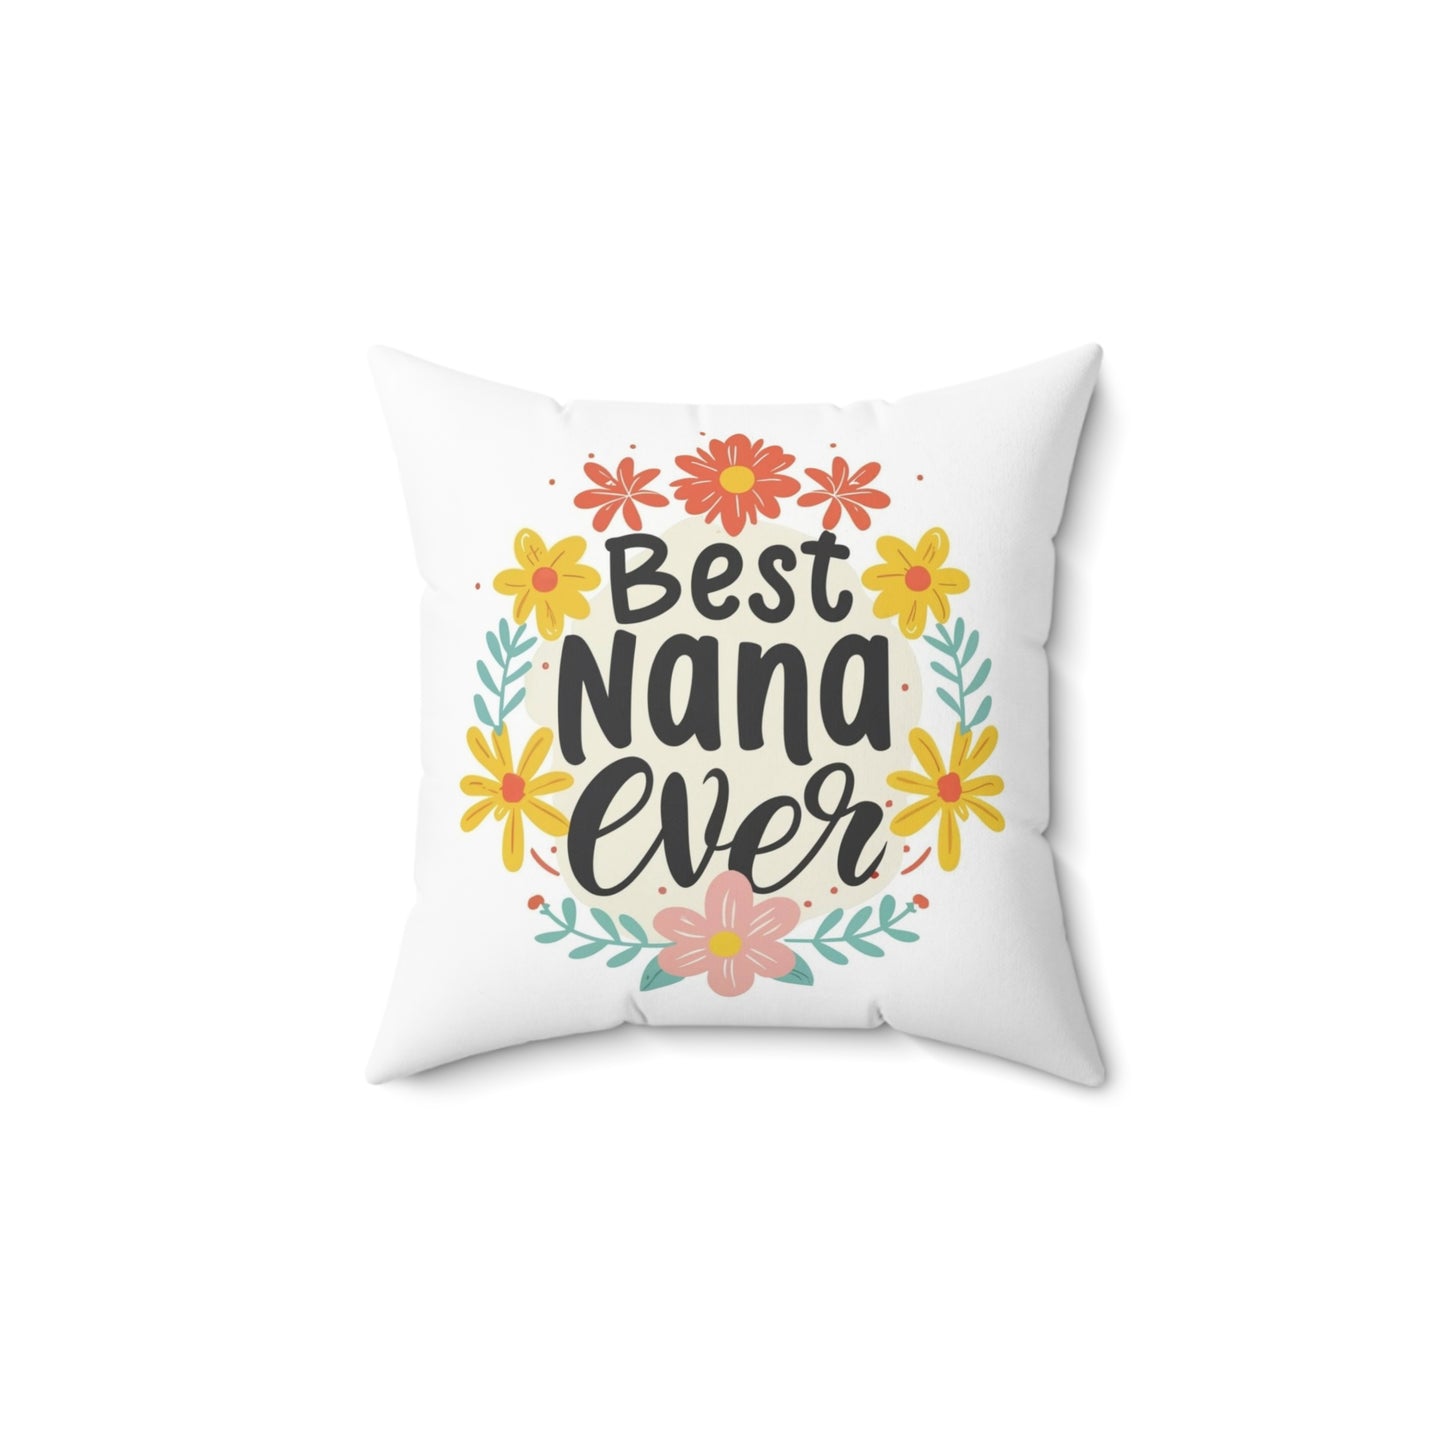 Best Nana Ever, Floral Print,  Spun Polyester Square Pillow, 14" x 14"